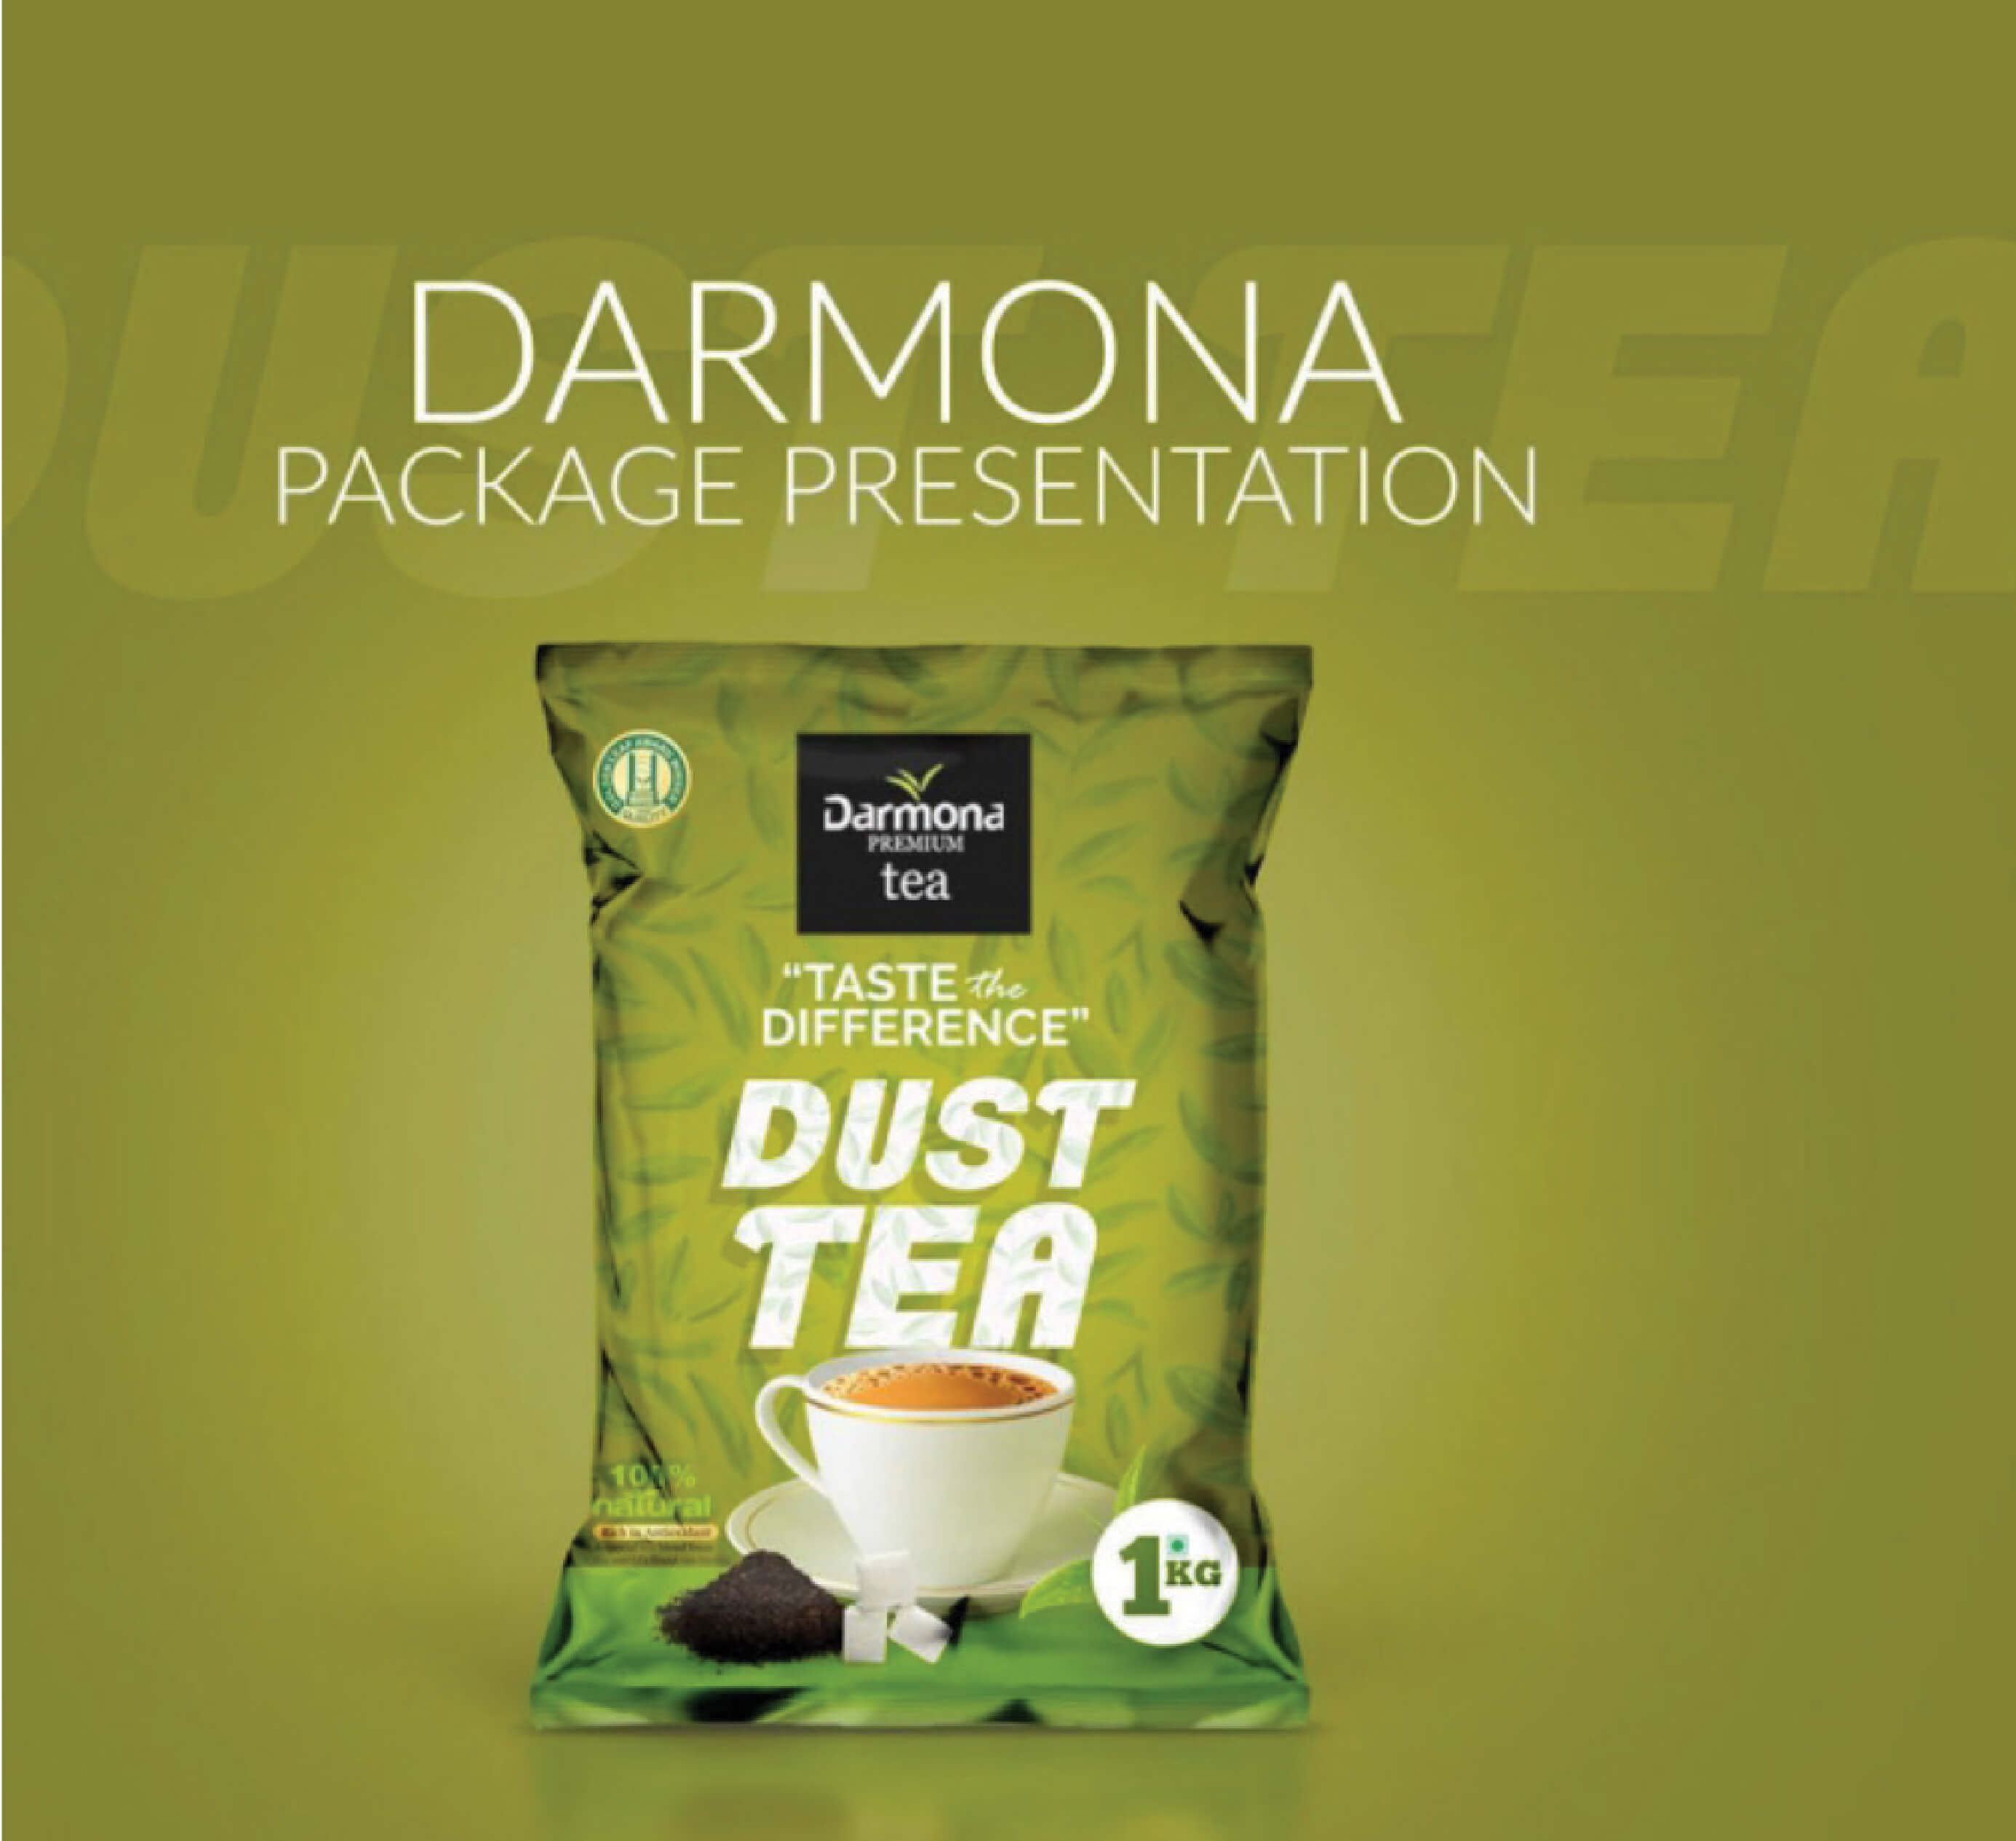 Darmona Tea Package